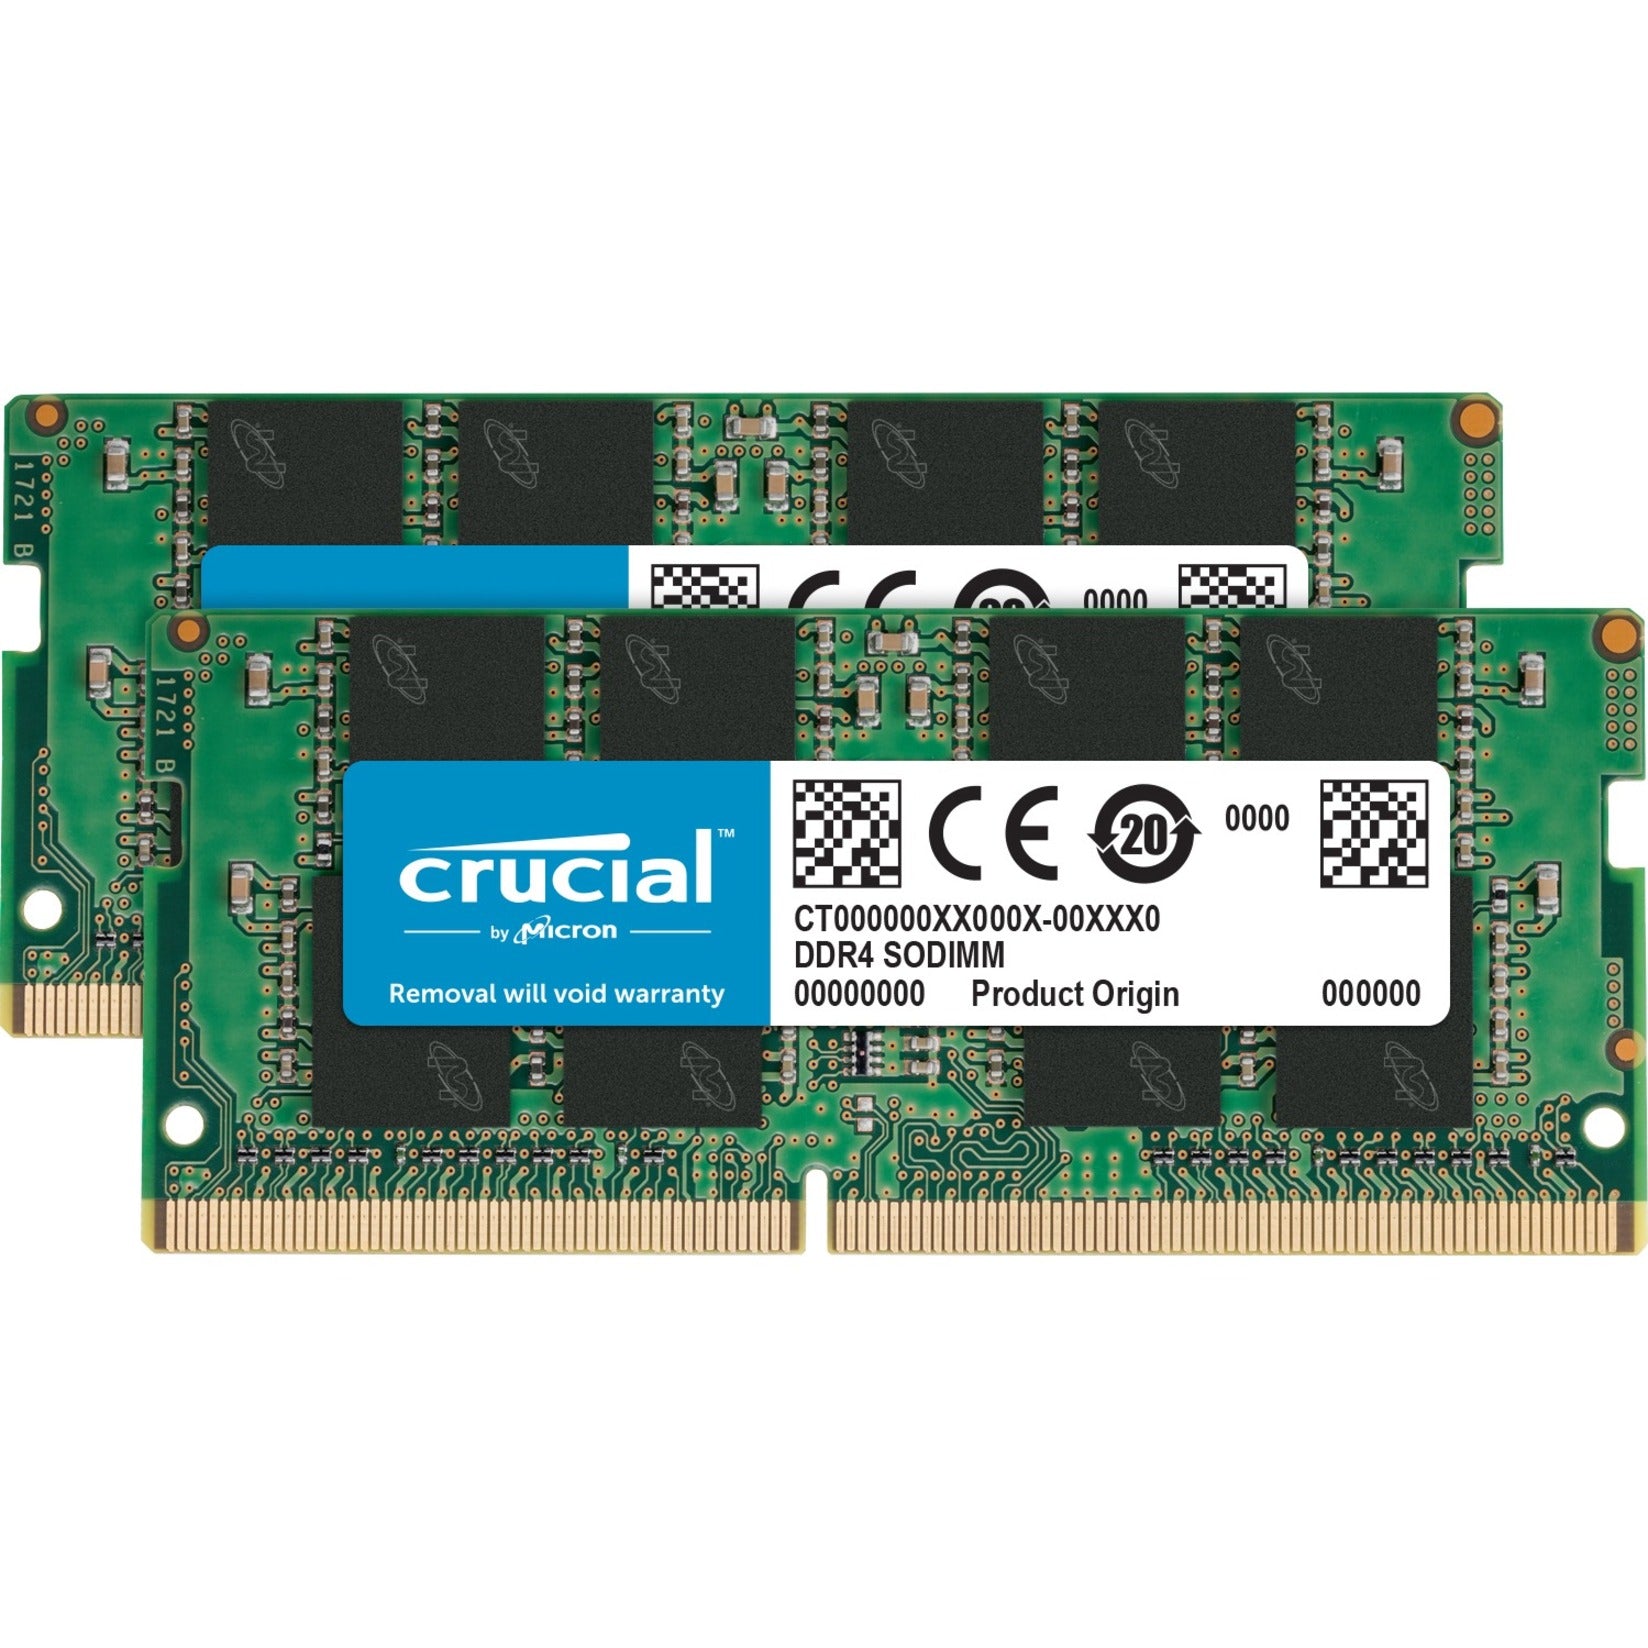 Crucial CT2K8G4SFRA266 16GB (2 x 8GB) DDR4 SDRAM Memory Kit, Lifetime Warranty, 2666 MHz Speed, Non-ECC, Notebook Compatible